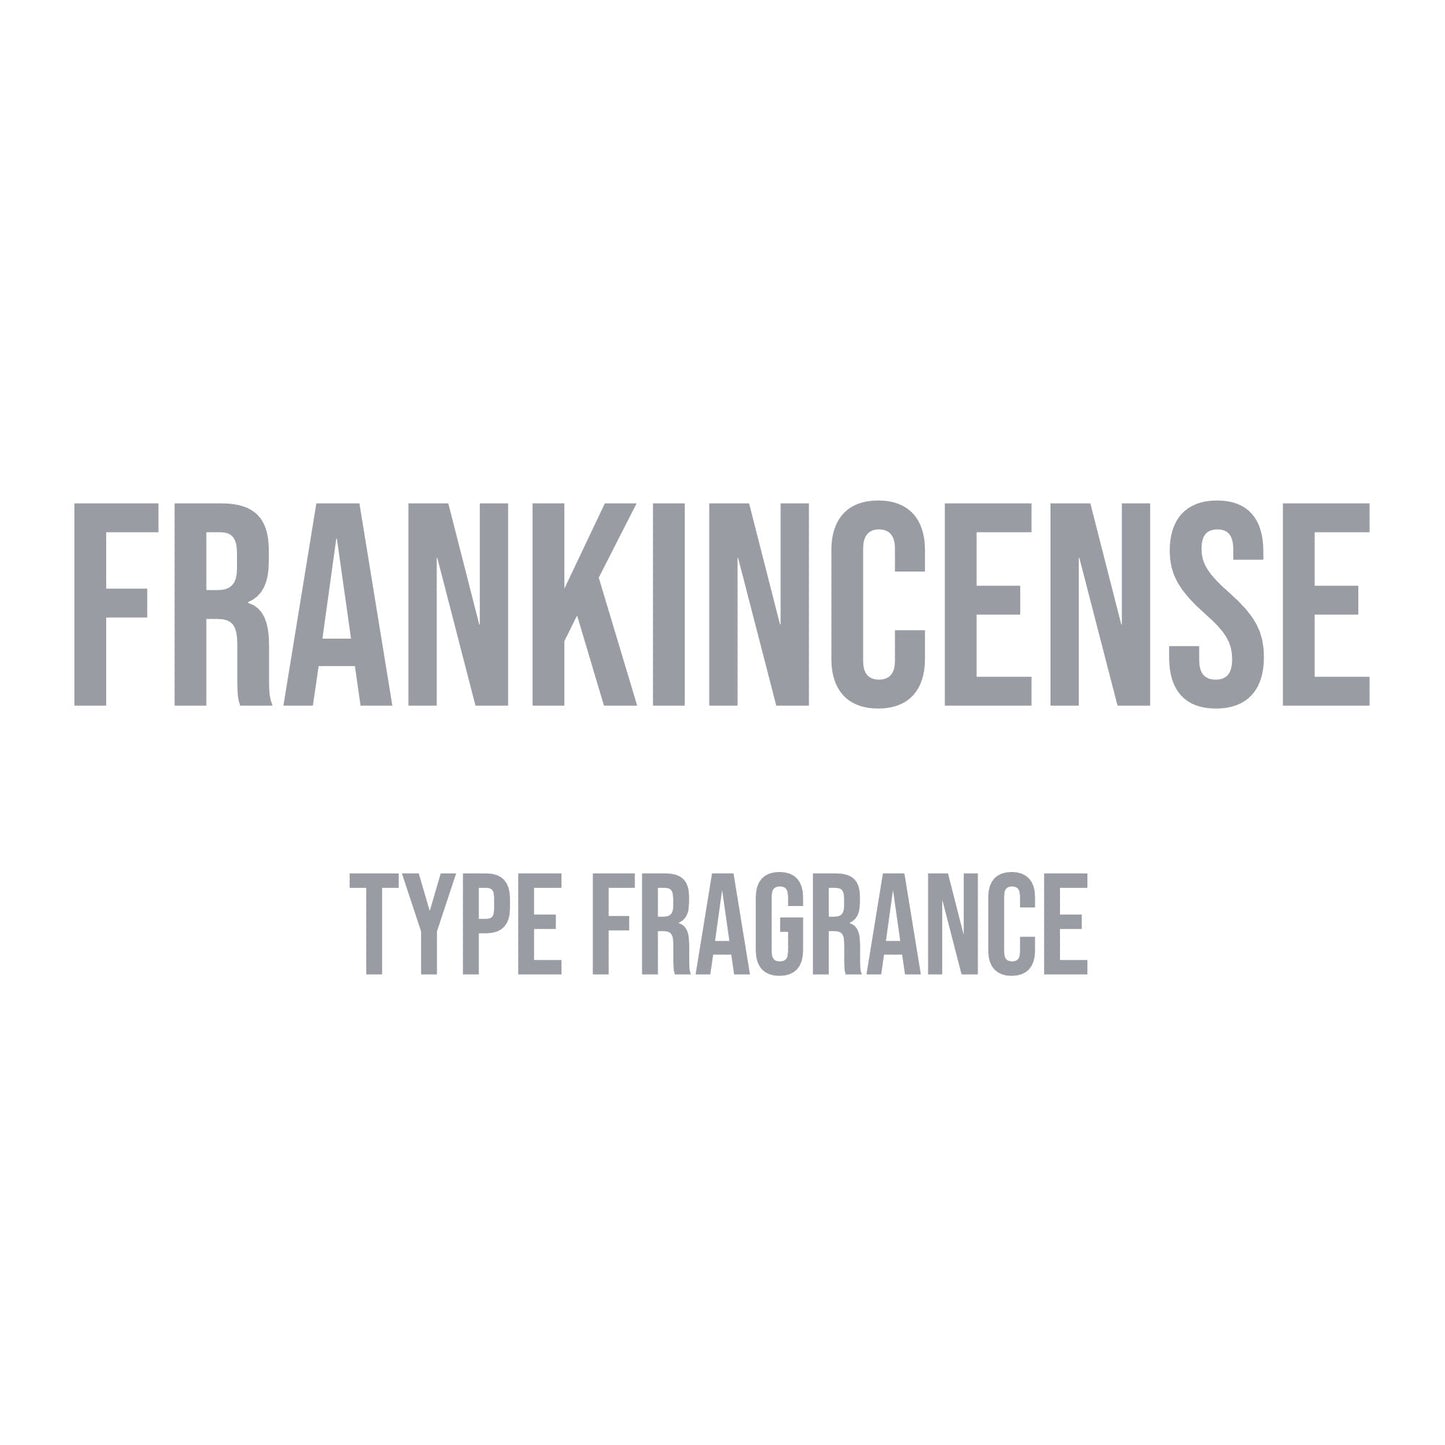 Frankincense Type Fragrance